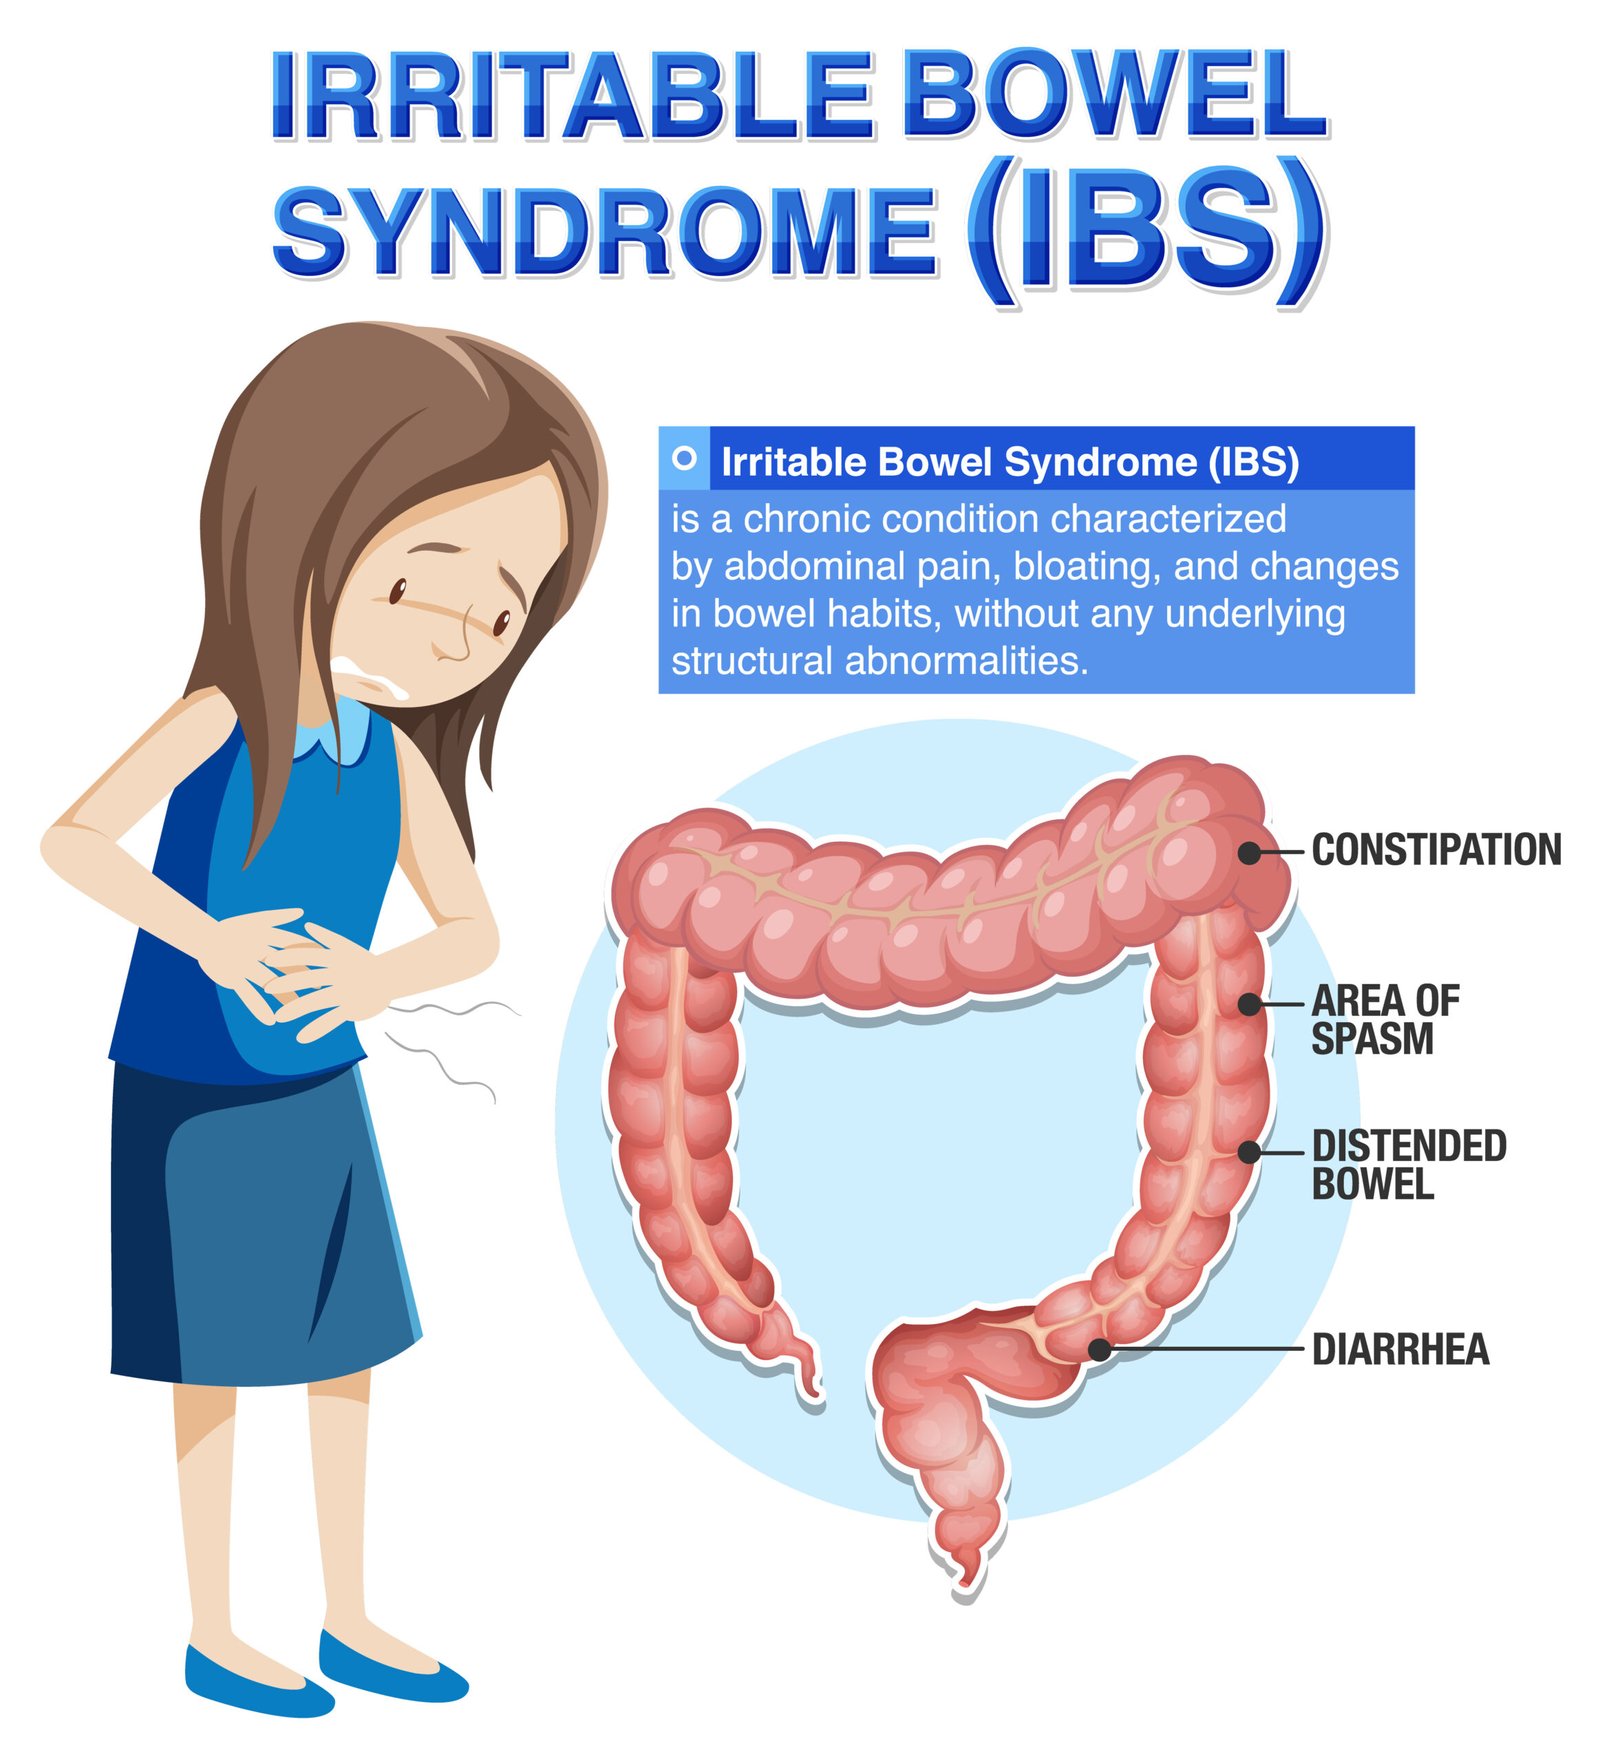 Irritable bowel syndrome IBS